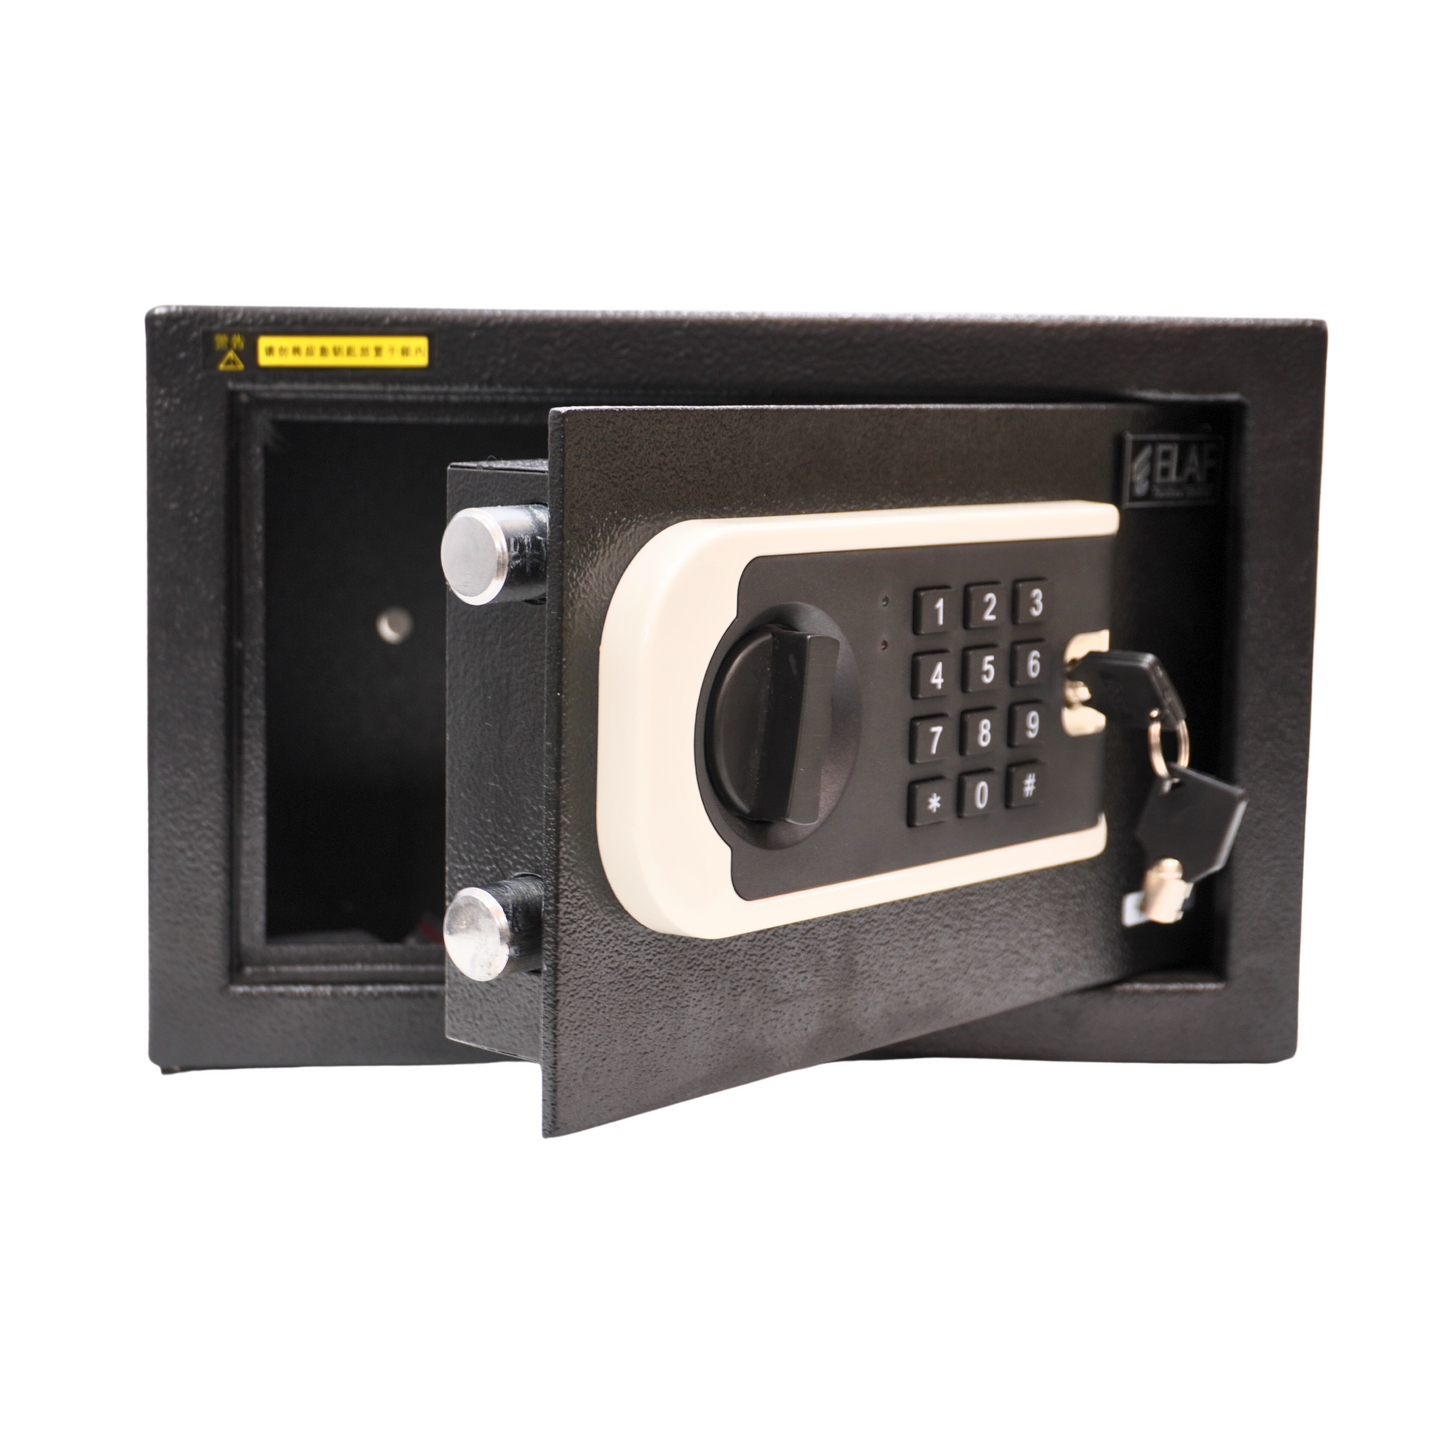 ELAF Digital Safety Locker (FT-20EUD)